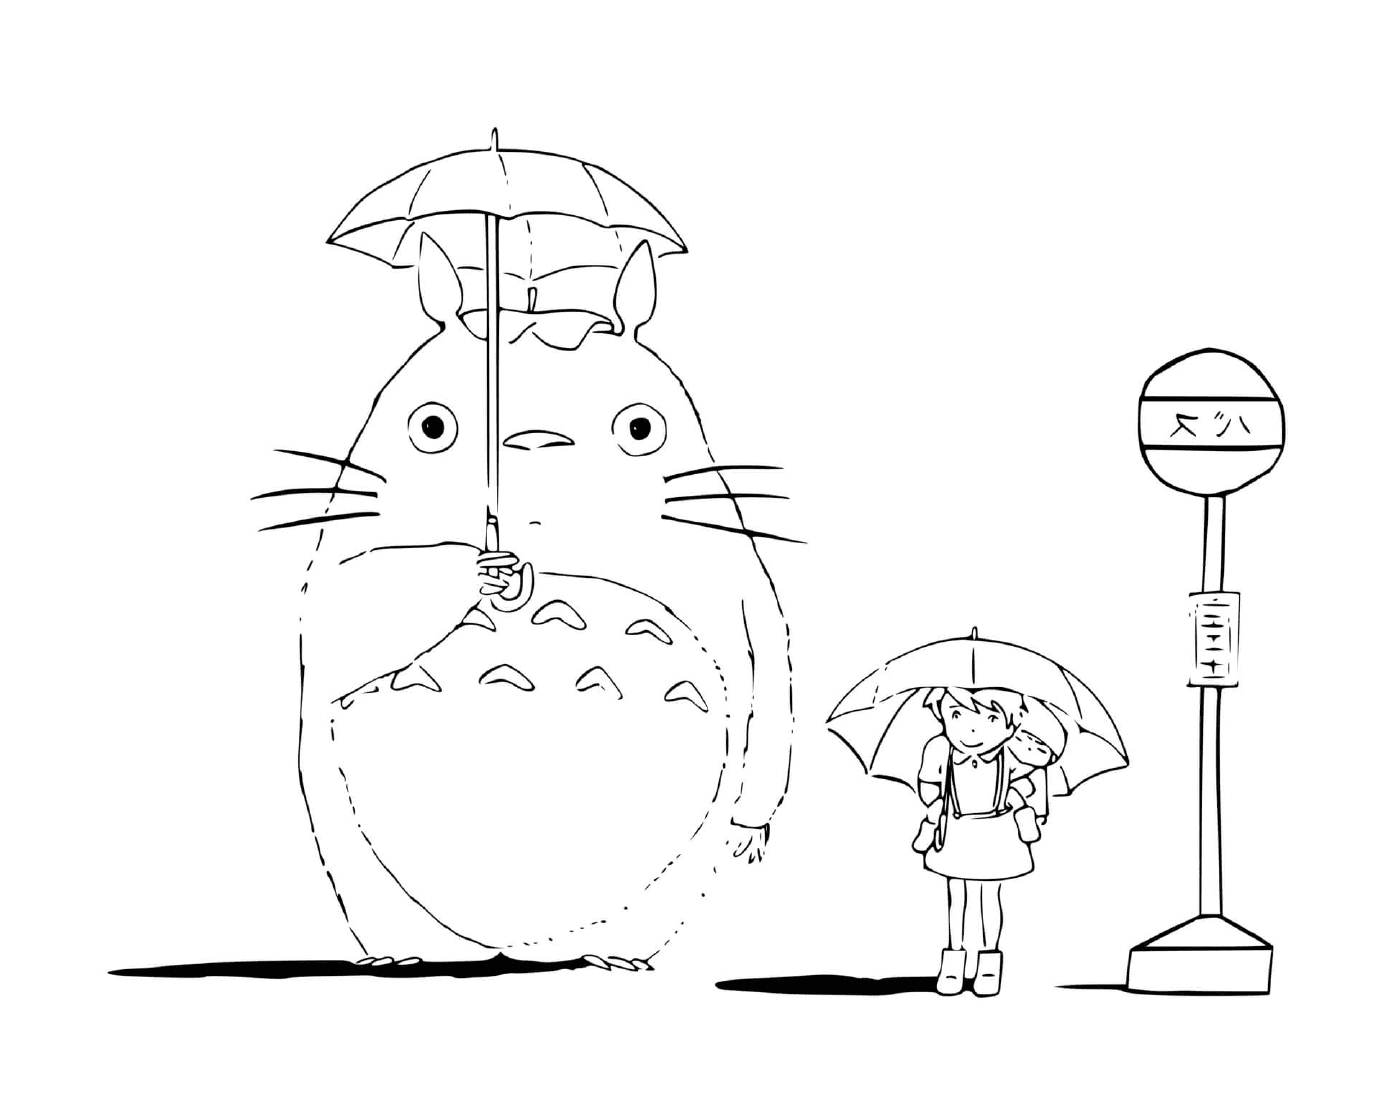  Totoro holding an umbrella 